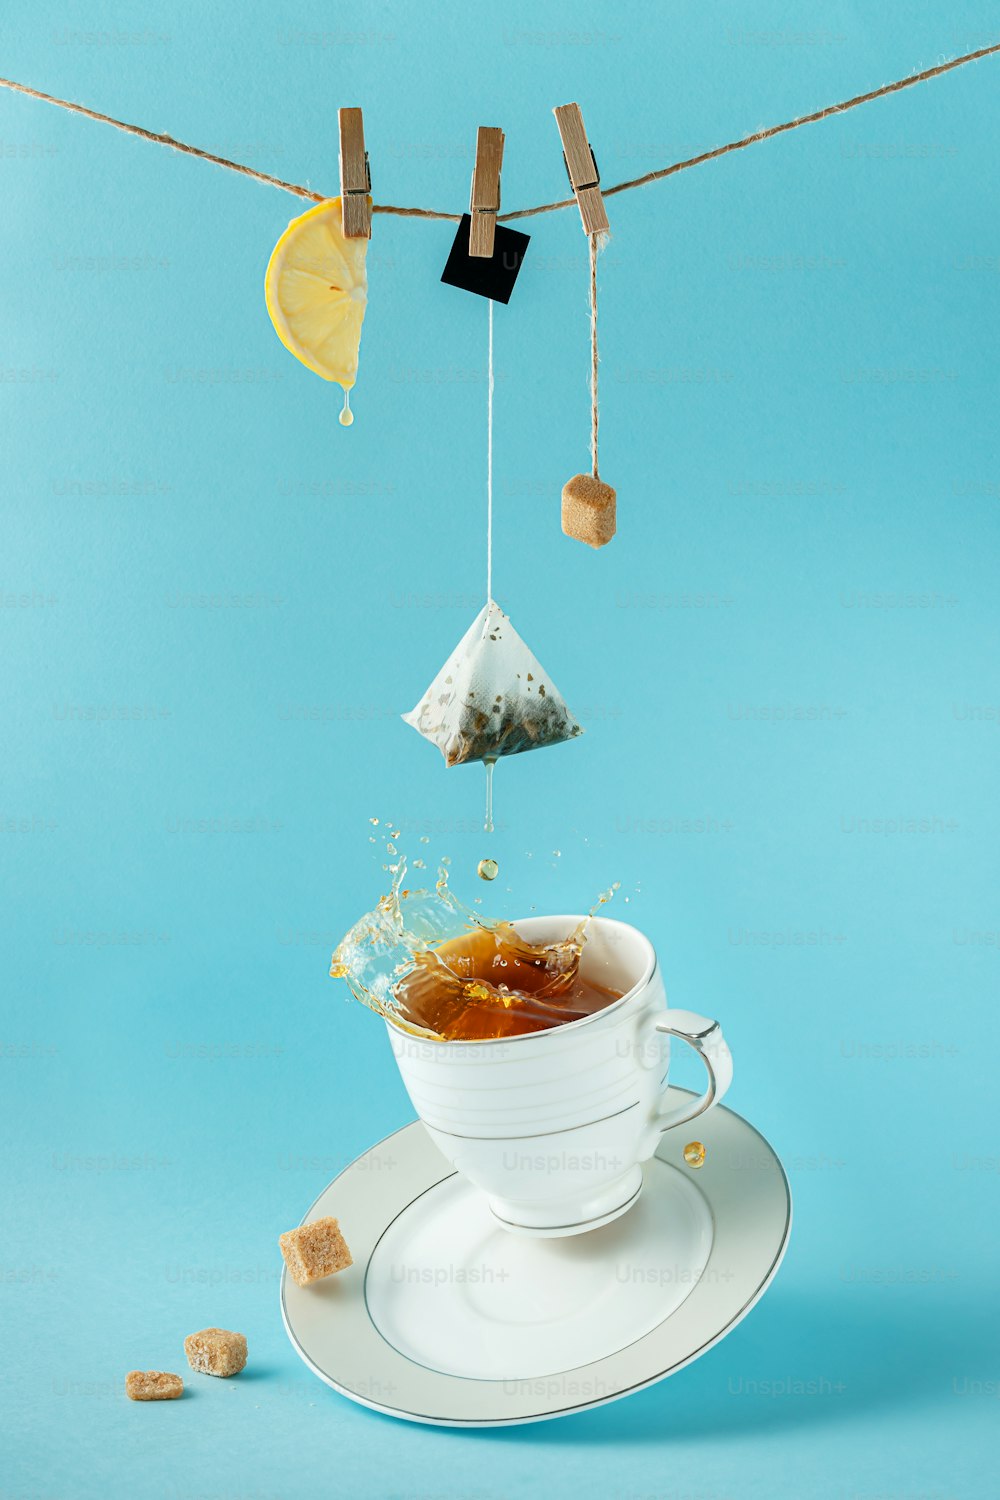 Bolsita de té, limón y azúcar colgando de la cuerda sobre salpicando té en la taza sobre fondo azul. Bodegón creativo